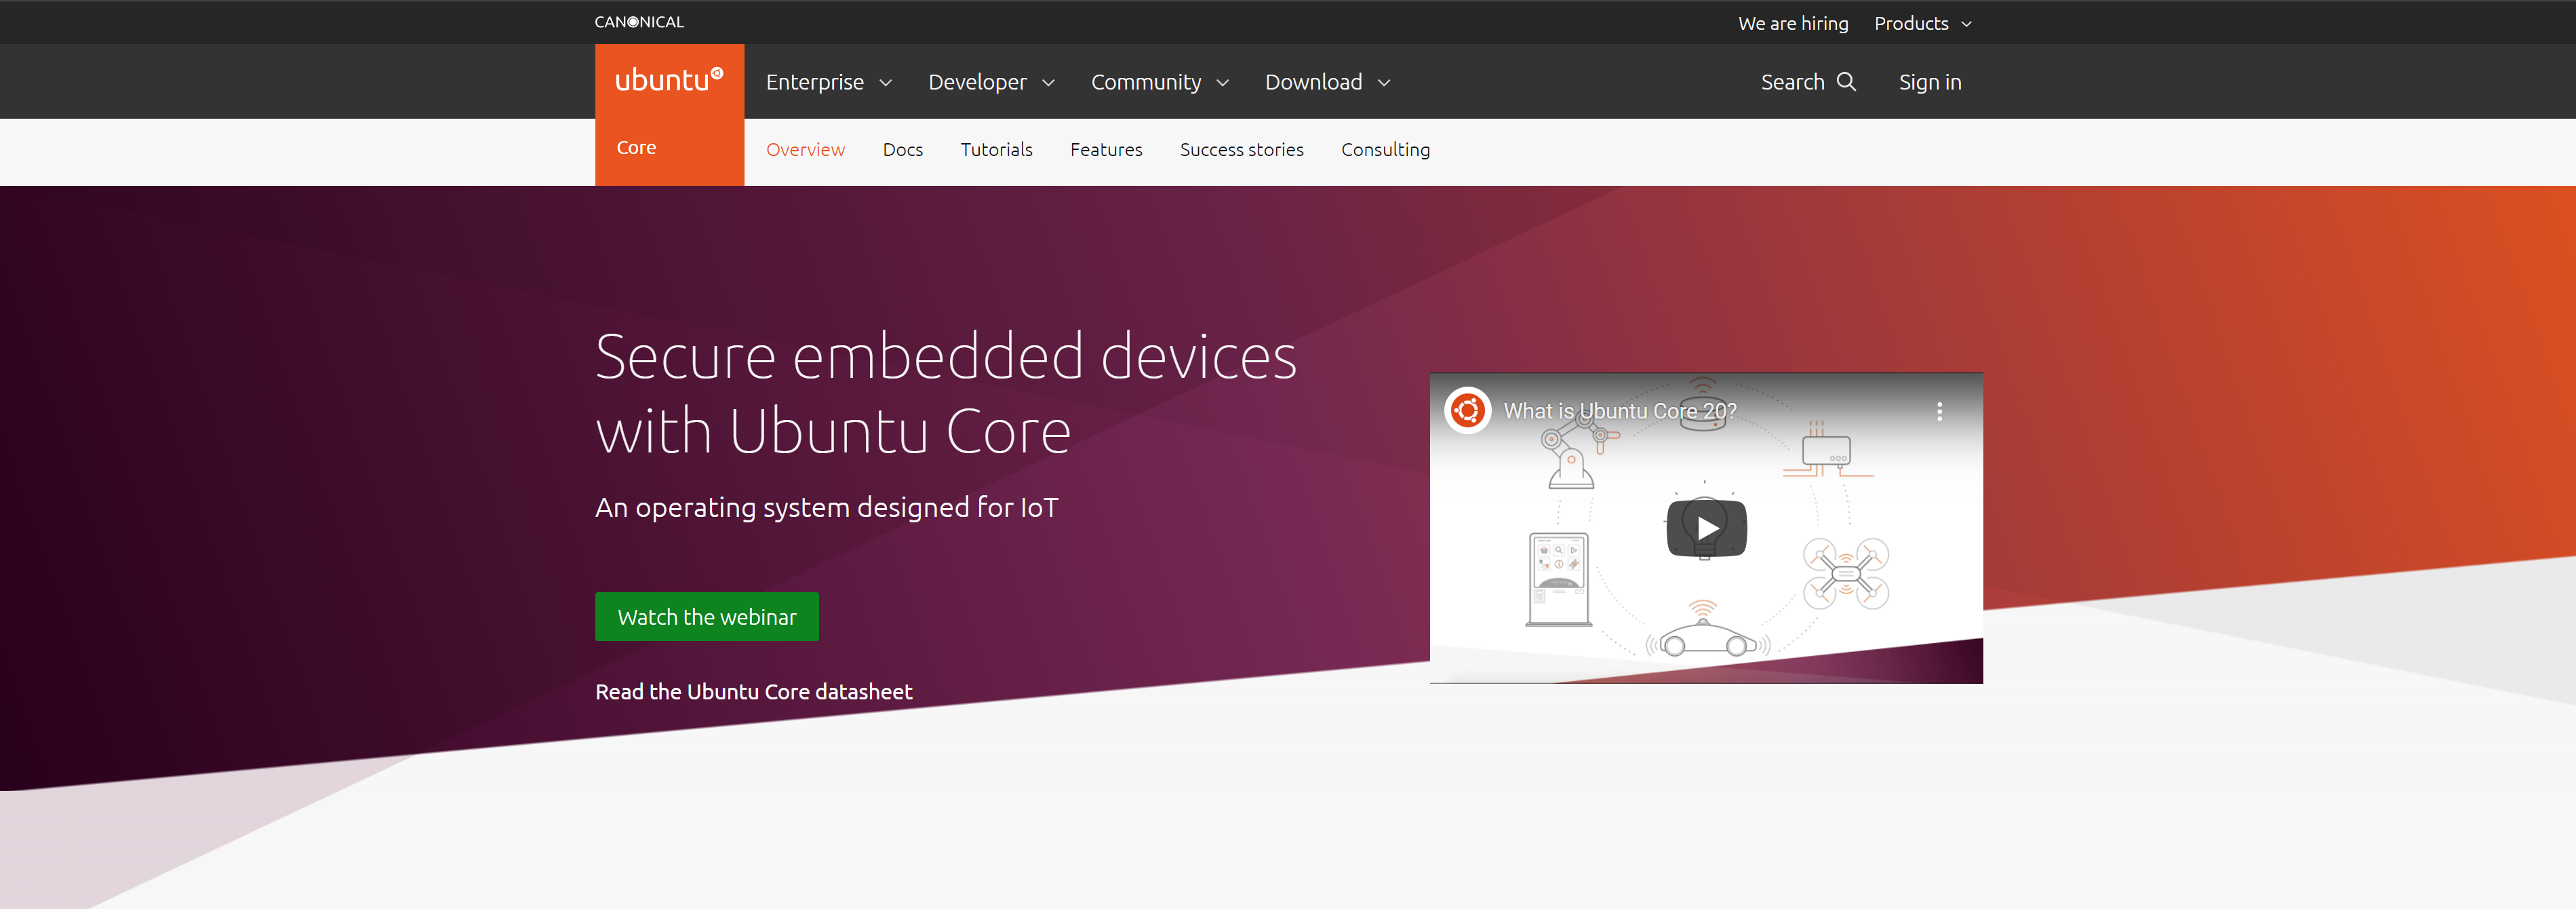 Ubuntu Mir 2.10: introdotti nuovi Touch Event e Move Gesture